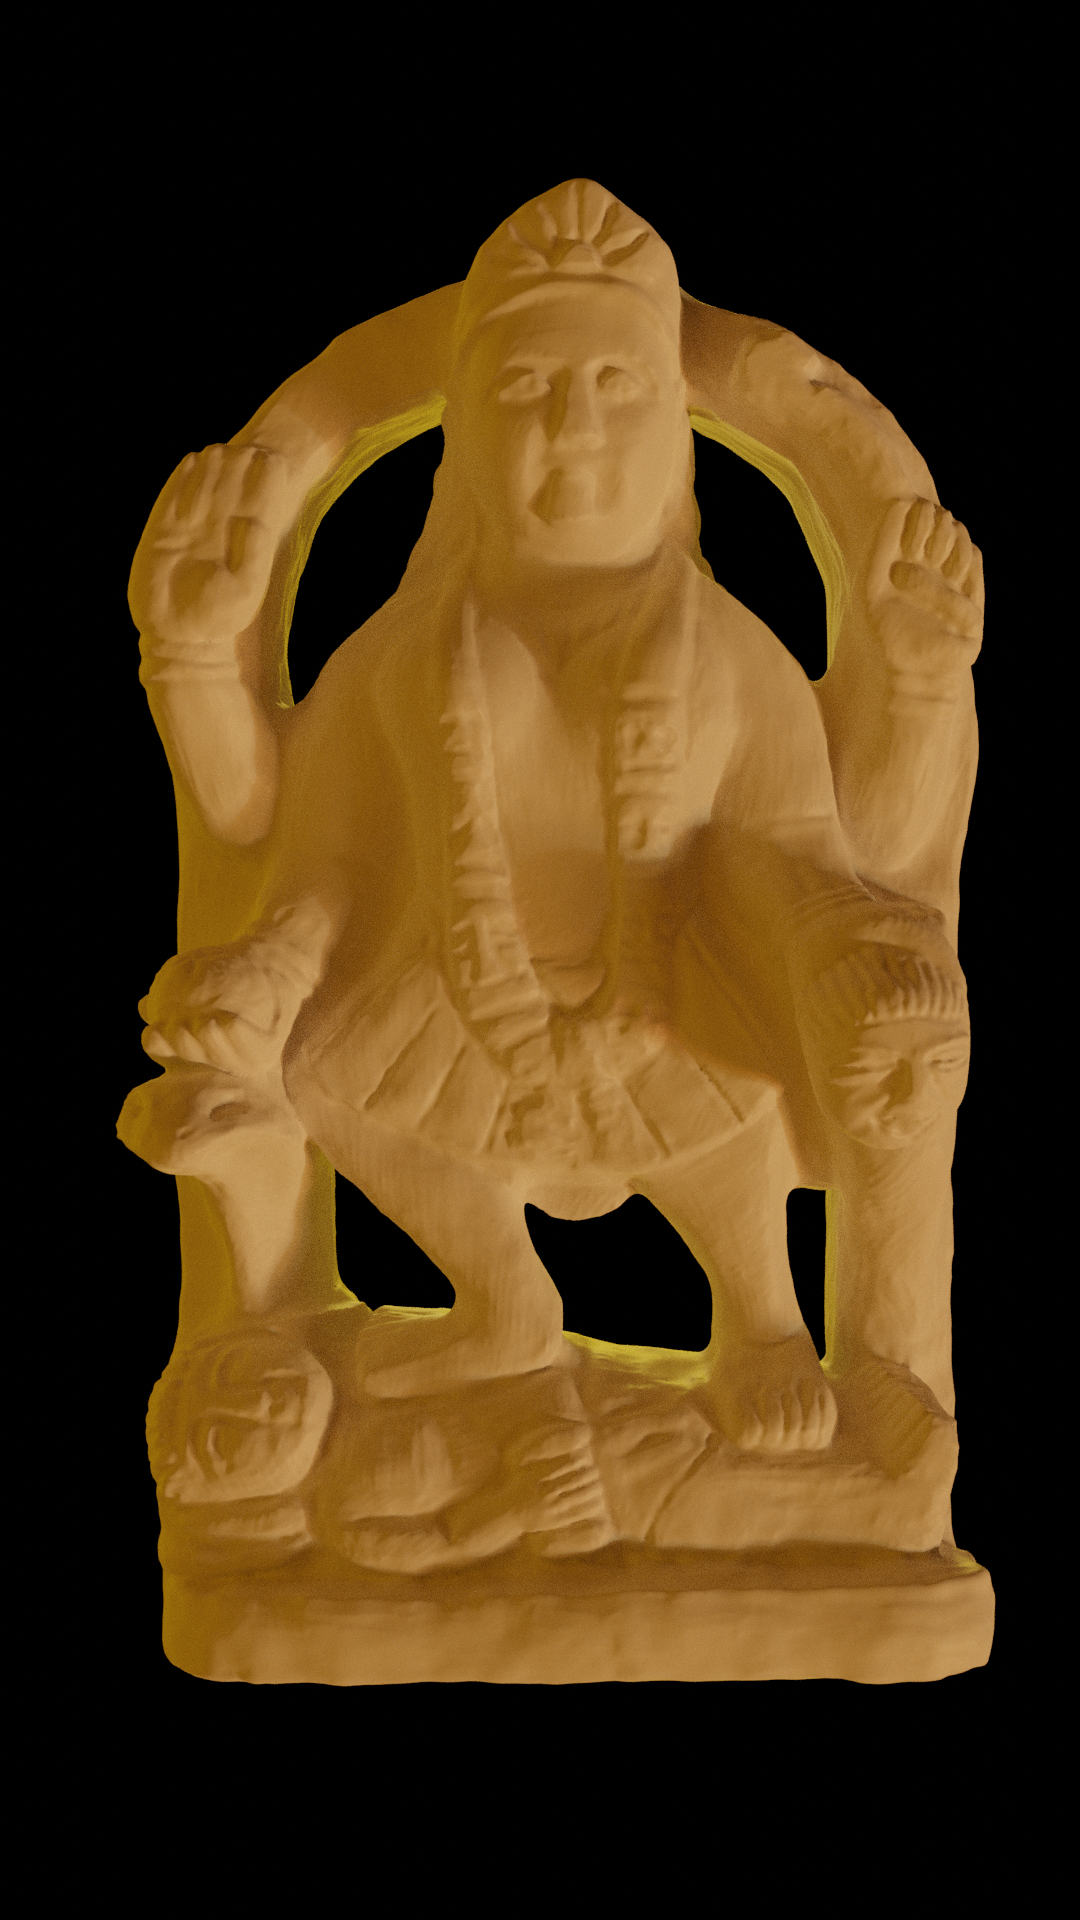 Goddess Kali - sculpture preview image 1